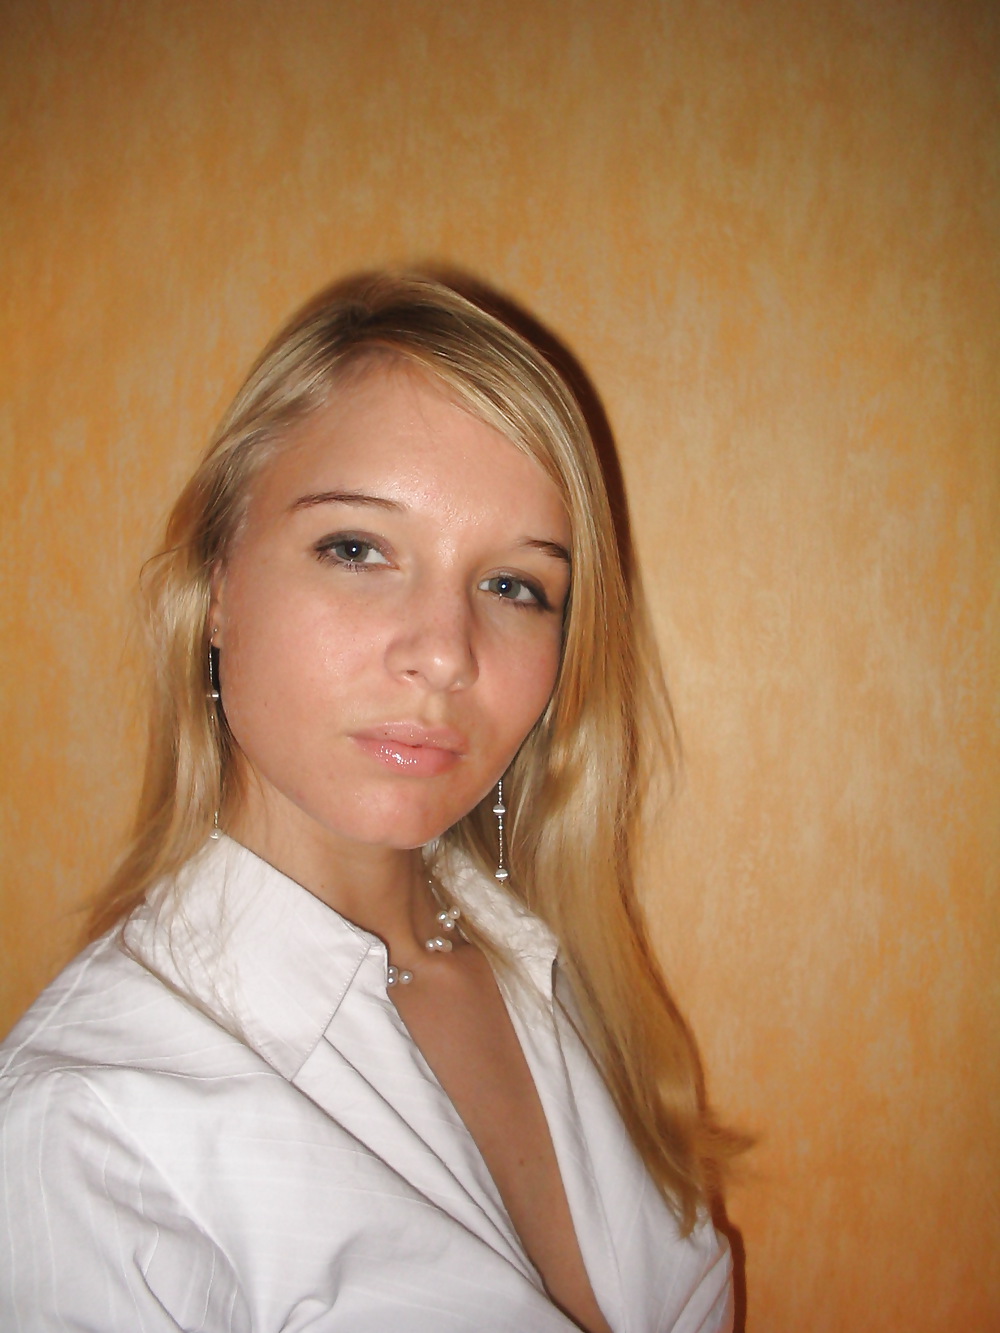 Sexy Blonde German Teen Poses In Lingerie #24813748